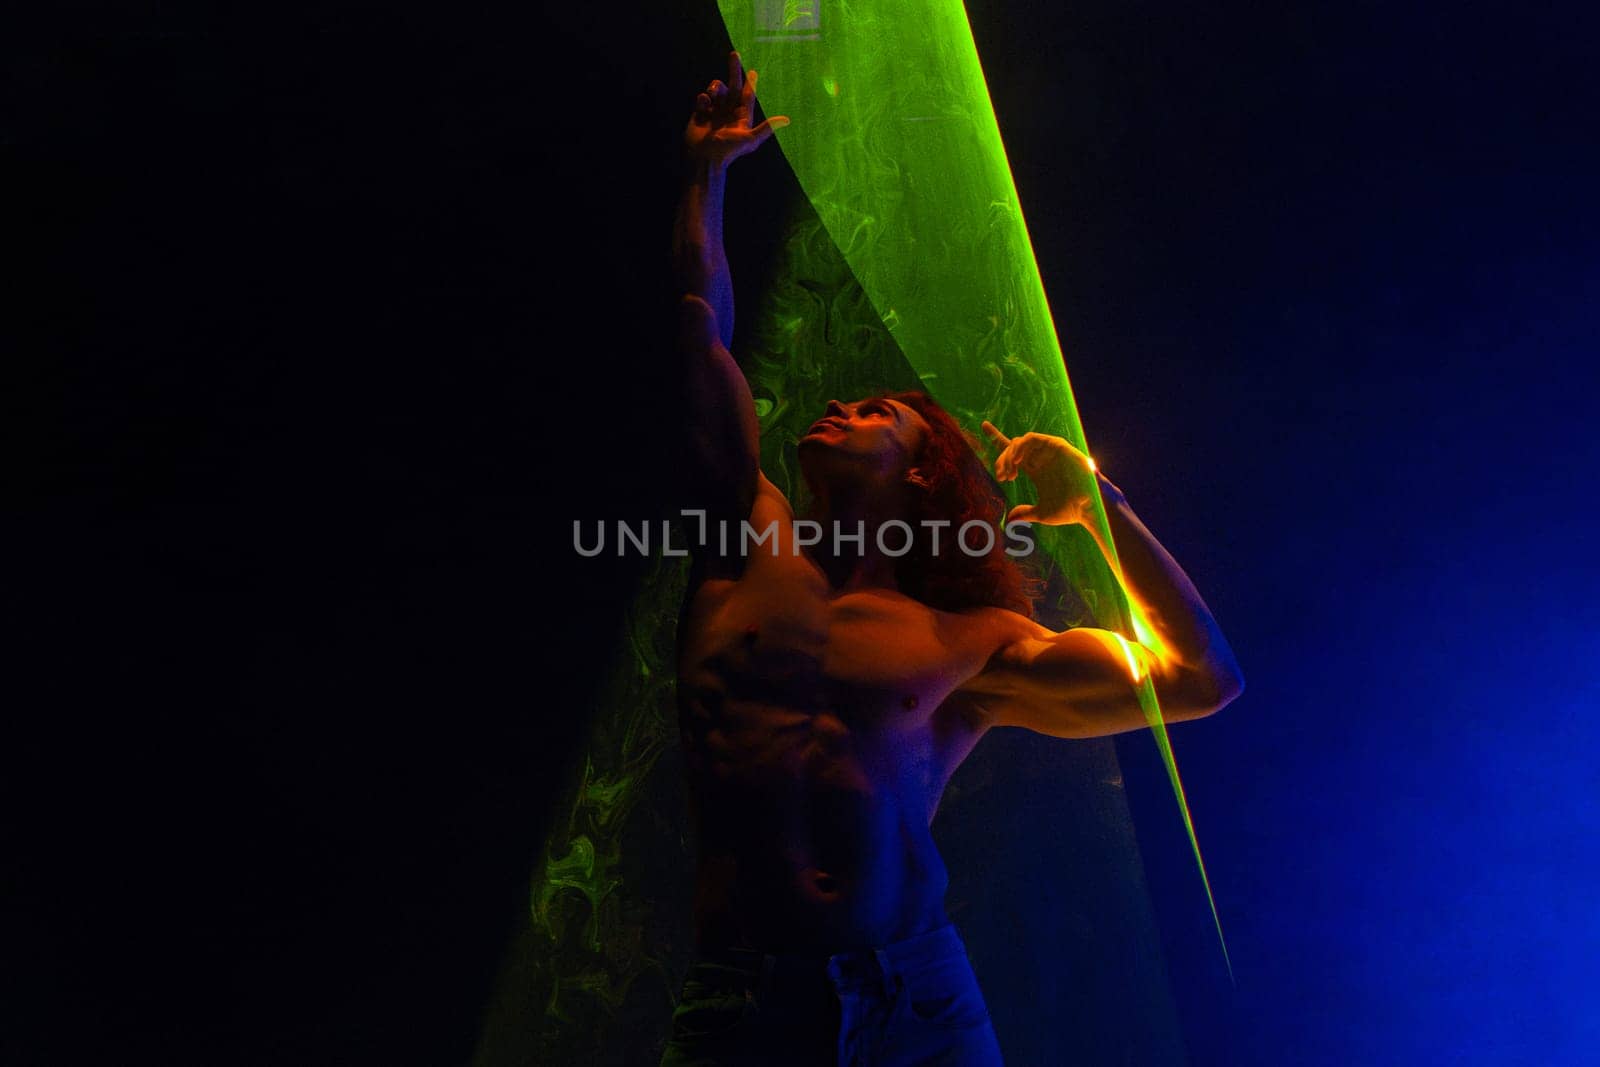 Sporty handsome muscular man portrait under colorful illumination, laser light by kristina_kokhanova